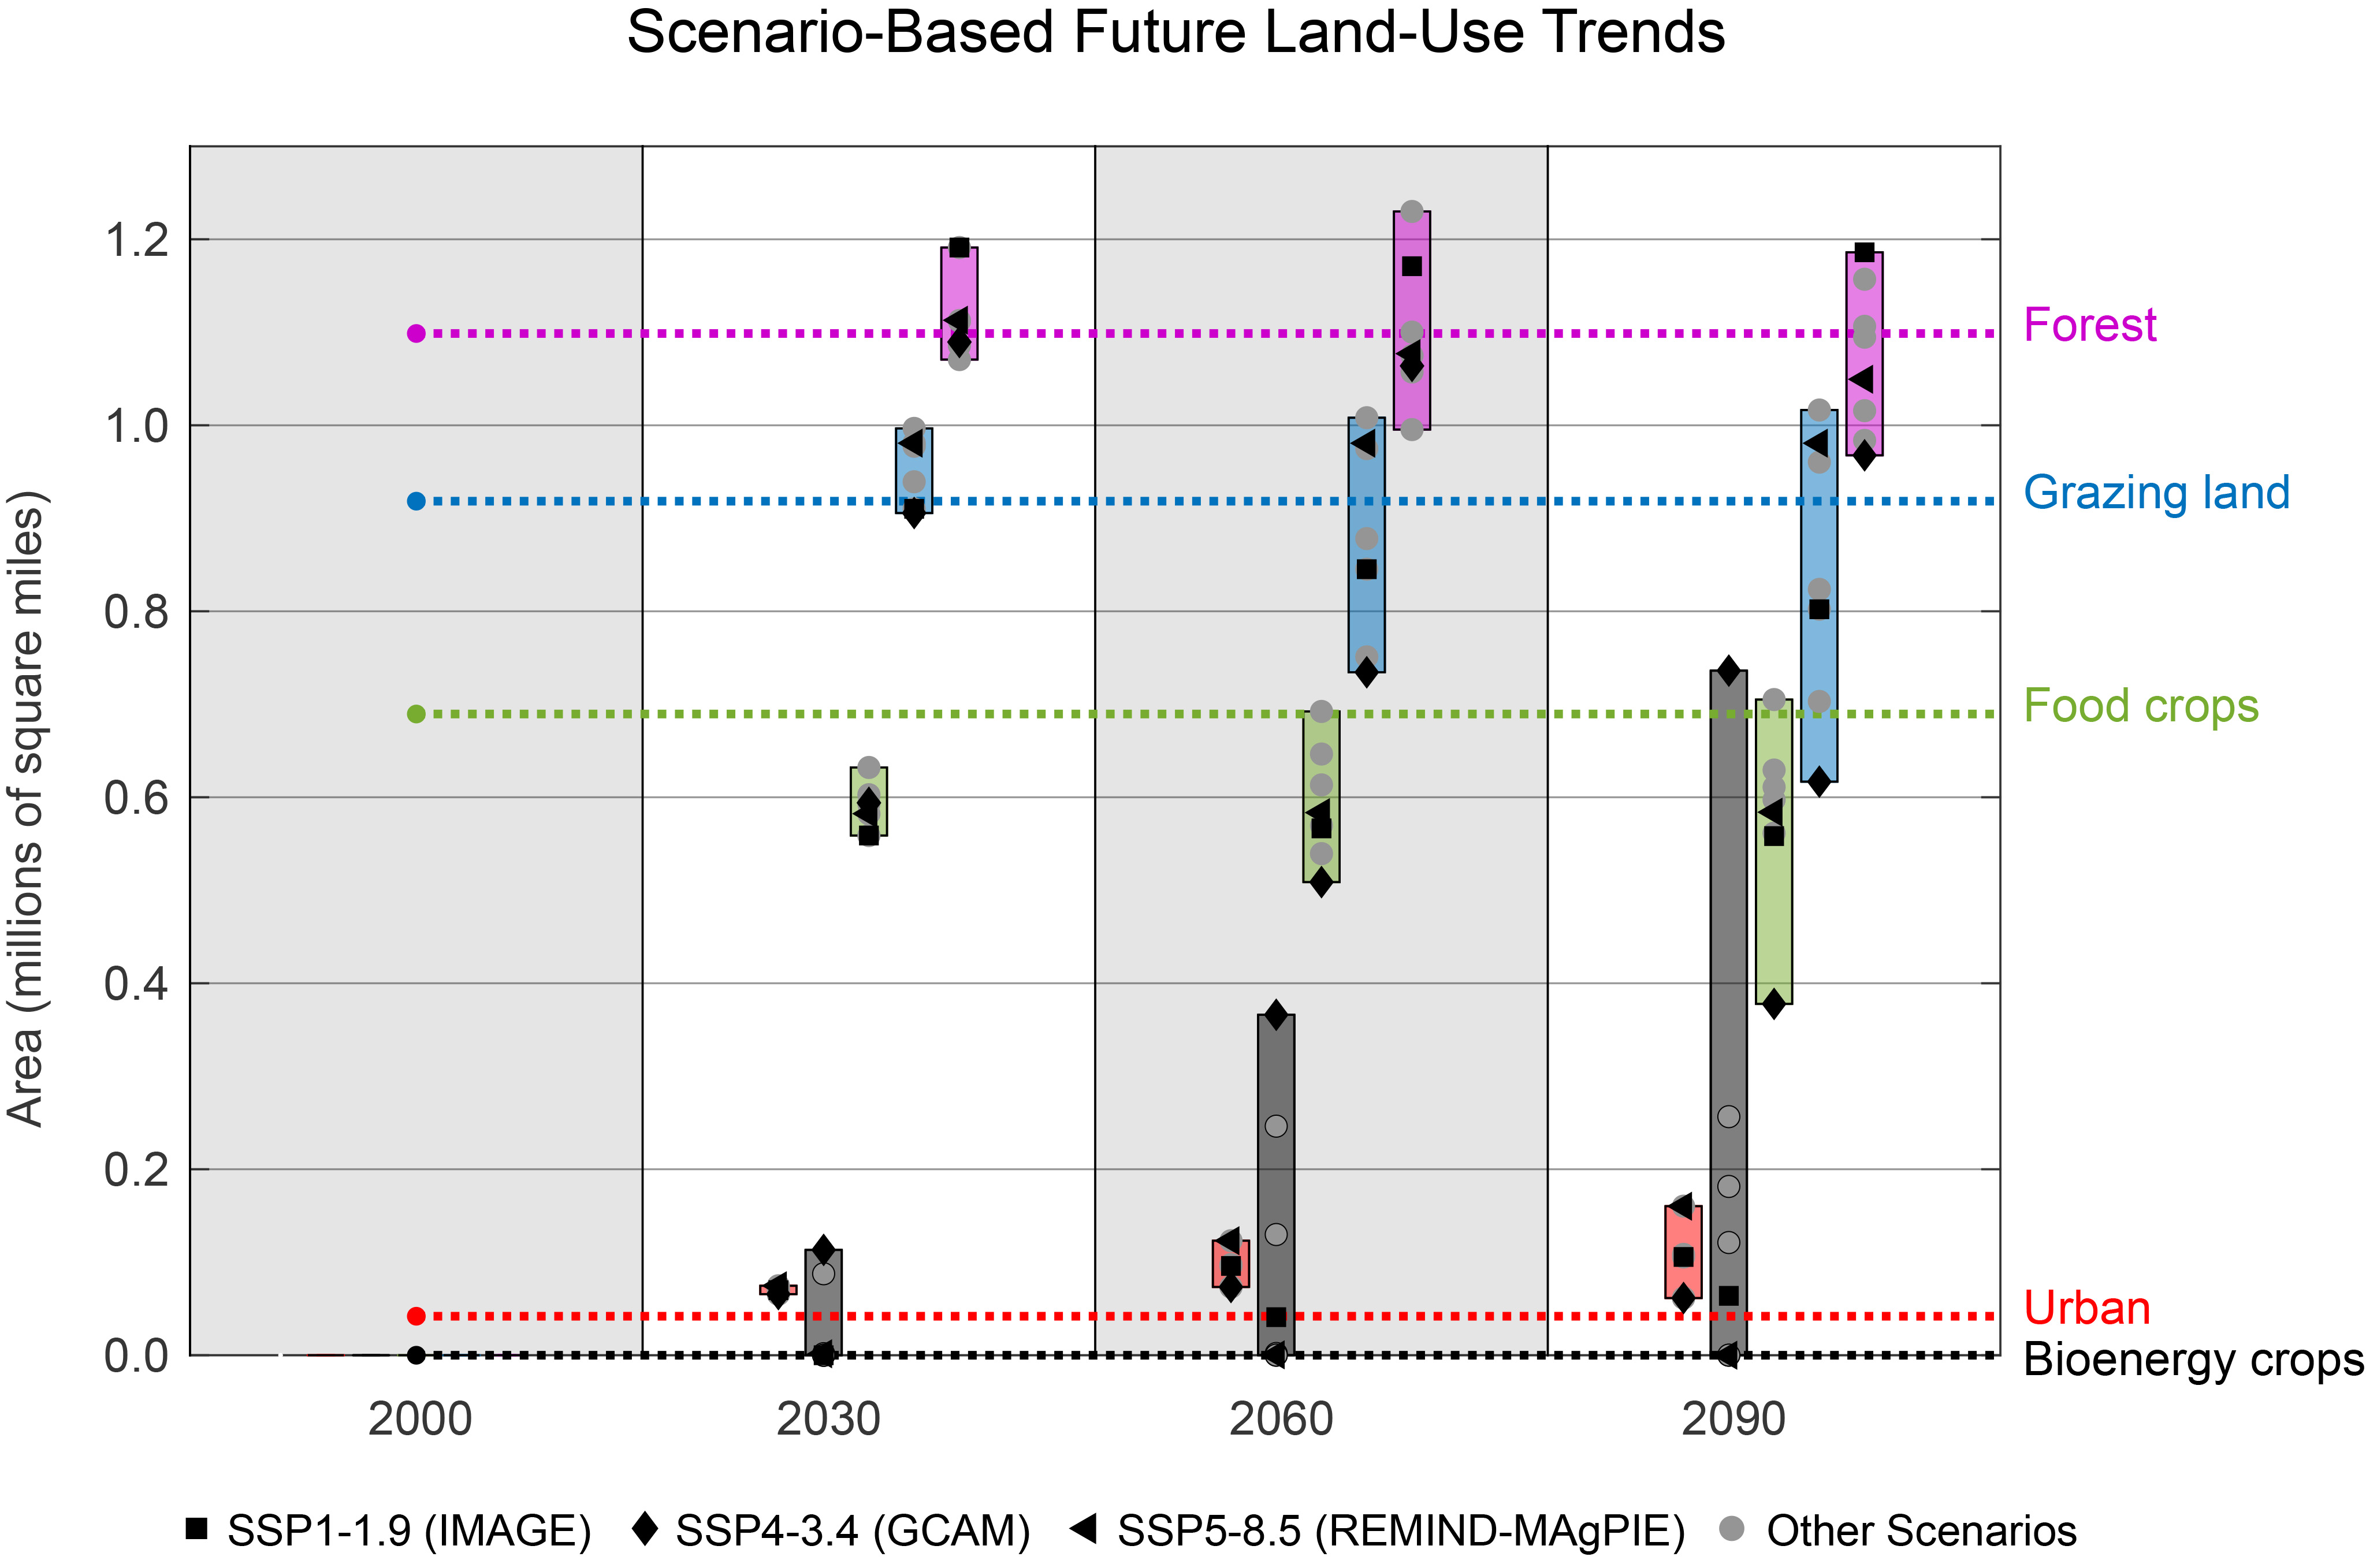 Scenario-Based Future Land-Use Trends